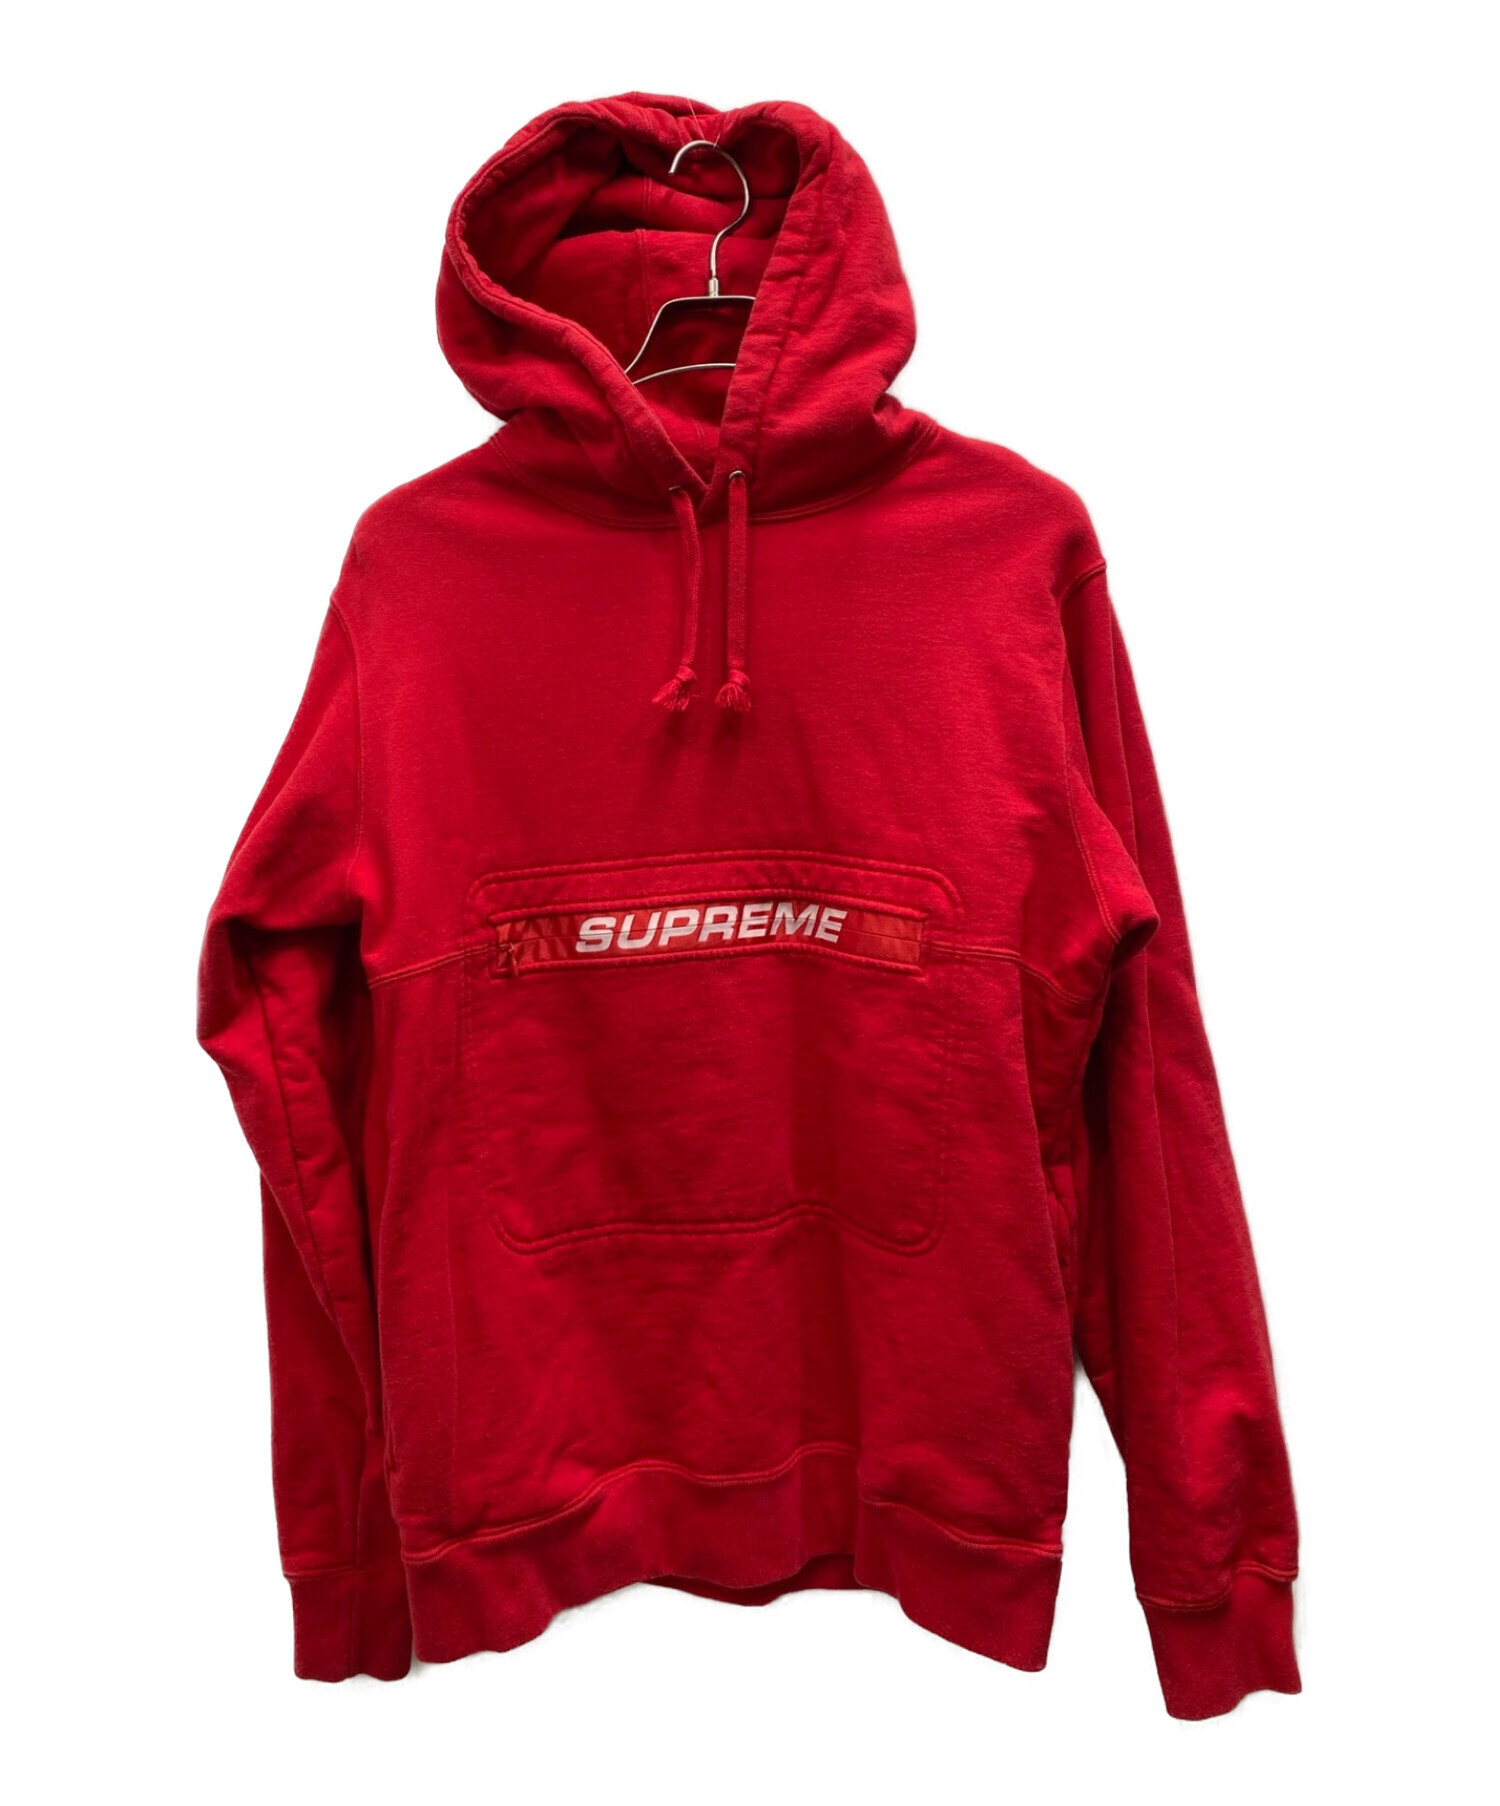 M / Supreme zip pouch Hooded sweatshirt - パーカー